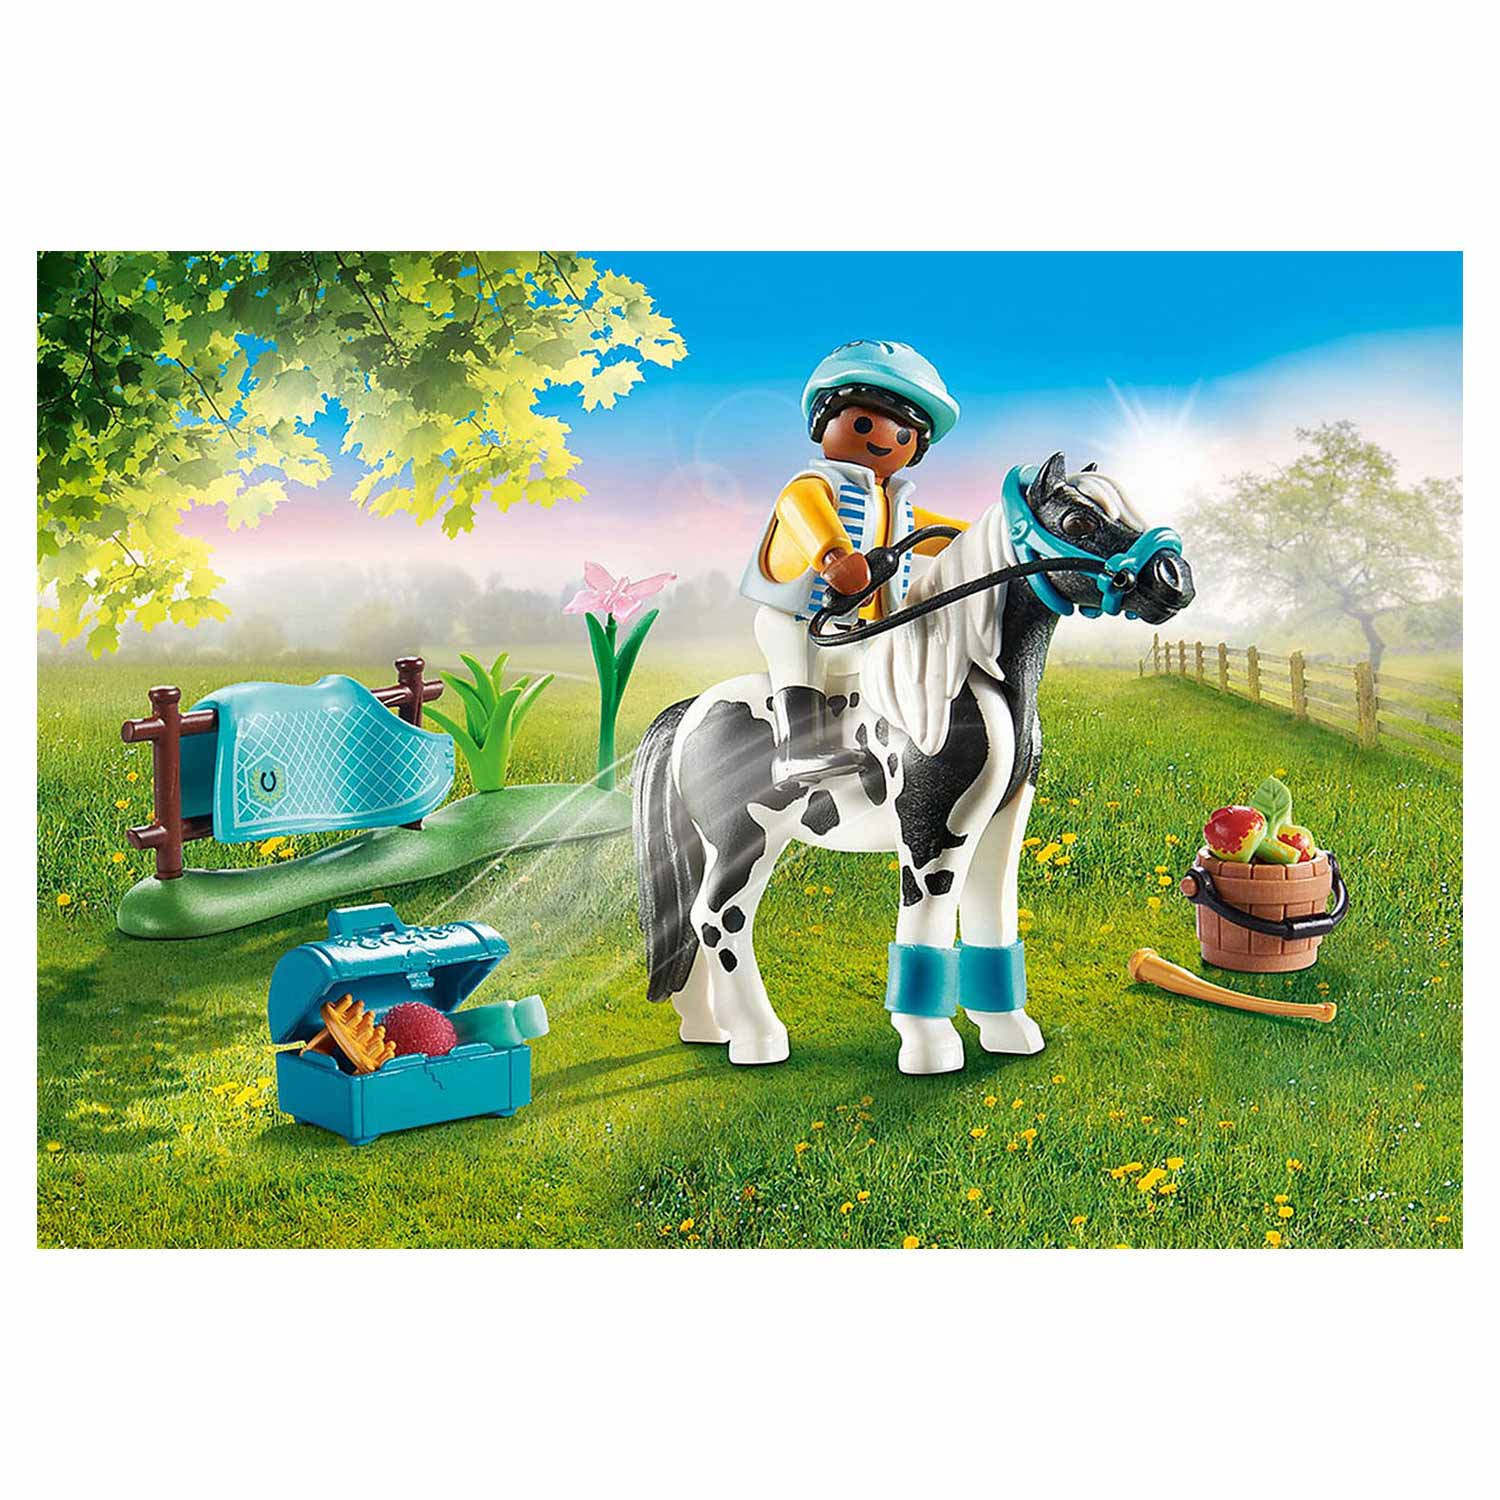 Playmobil Country Verzamelpony Lewitzer - 70515